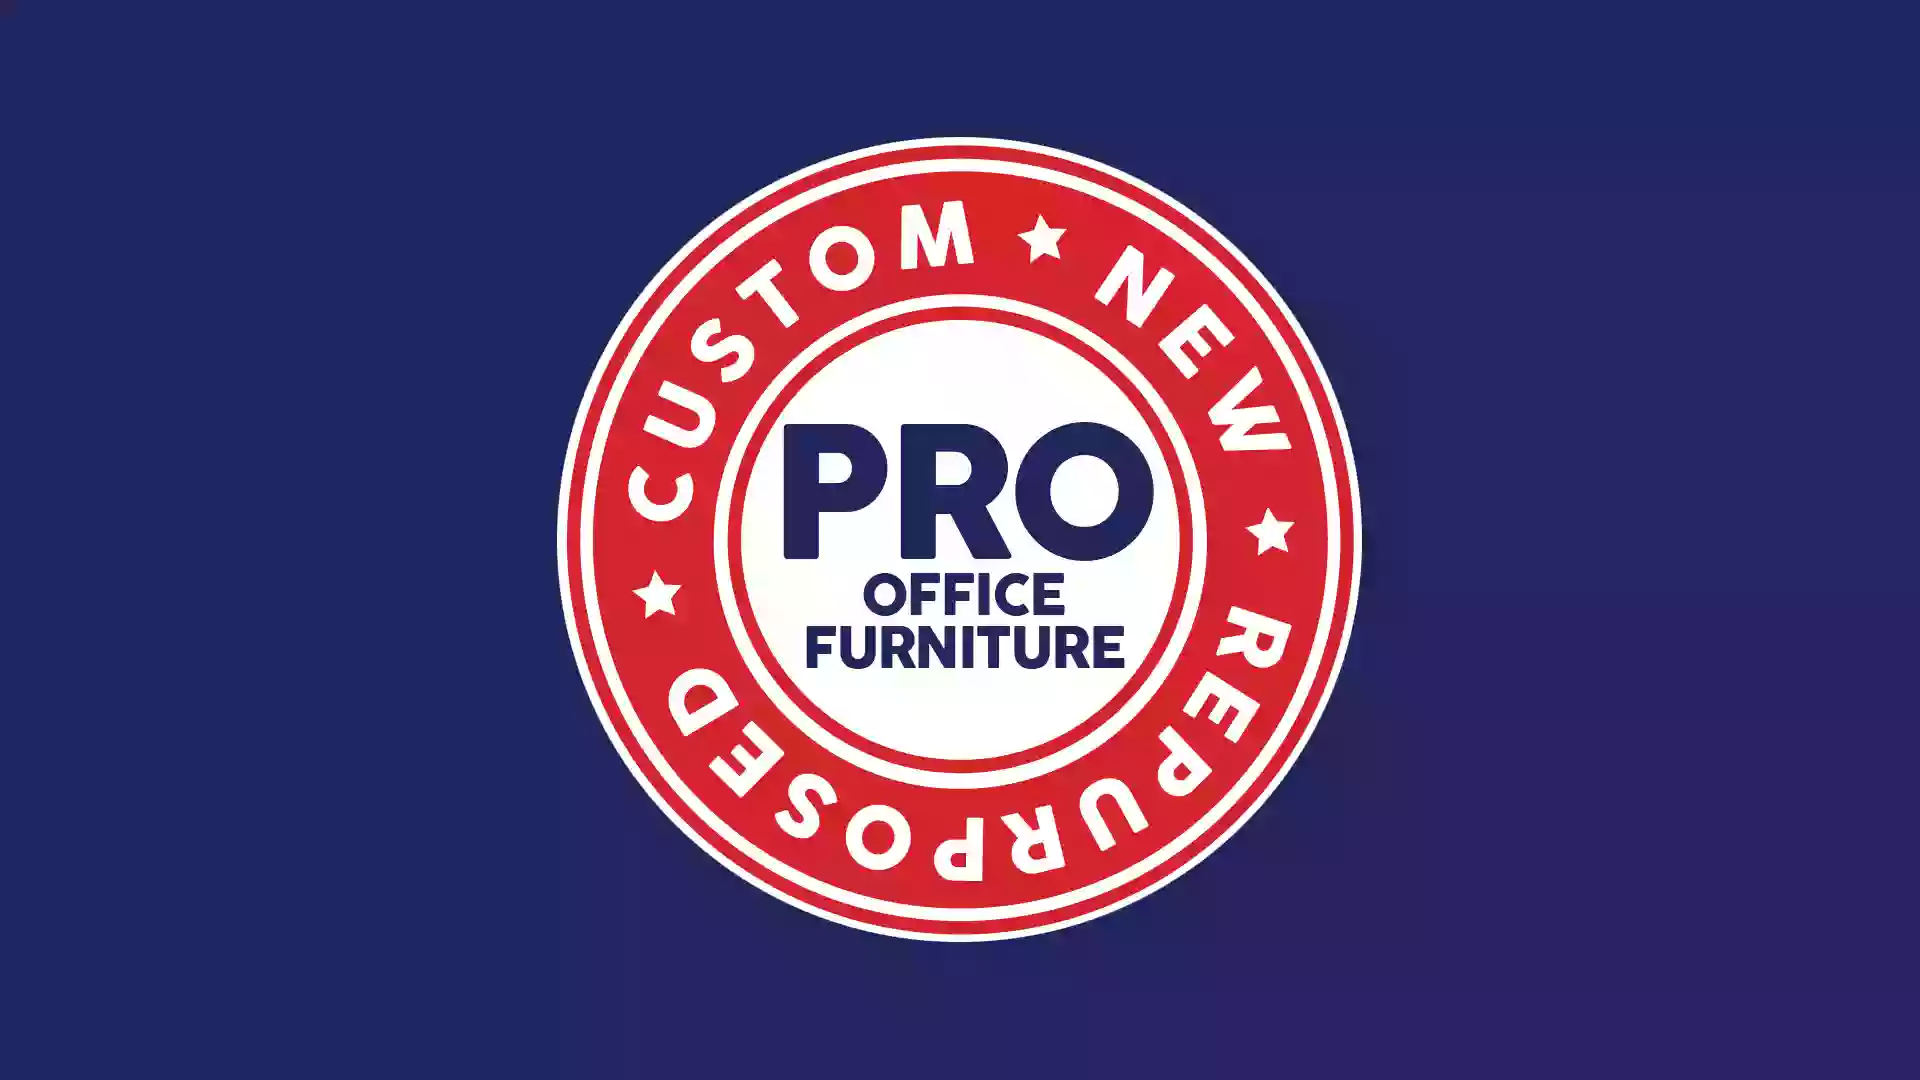 Pro Office Furniture